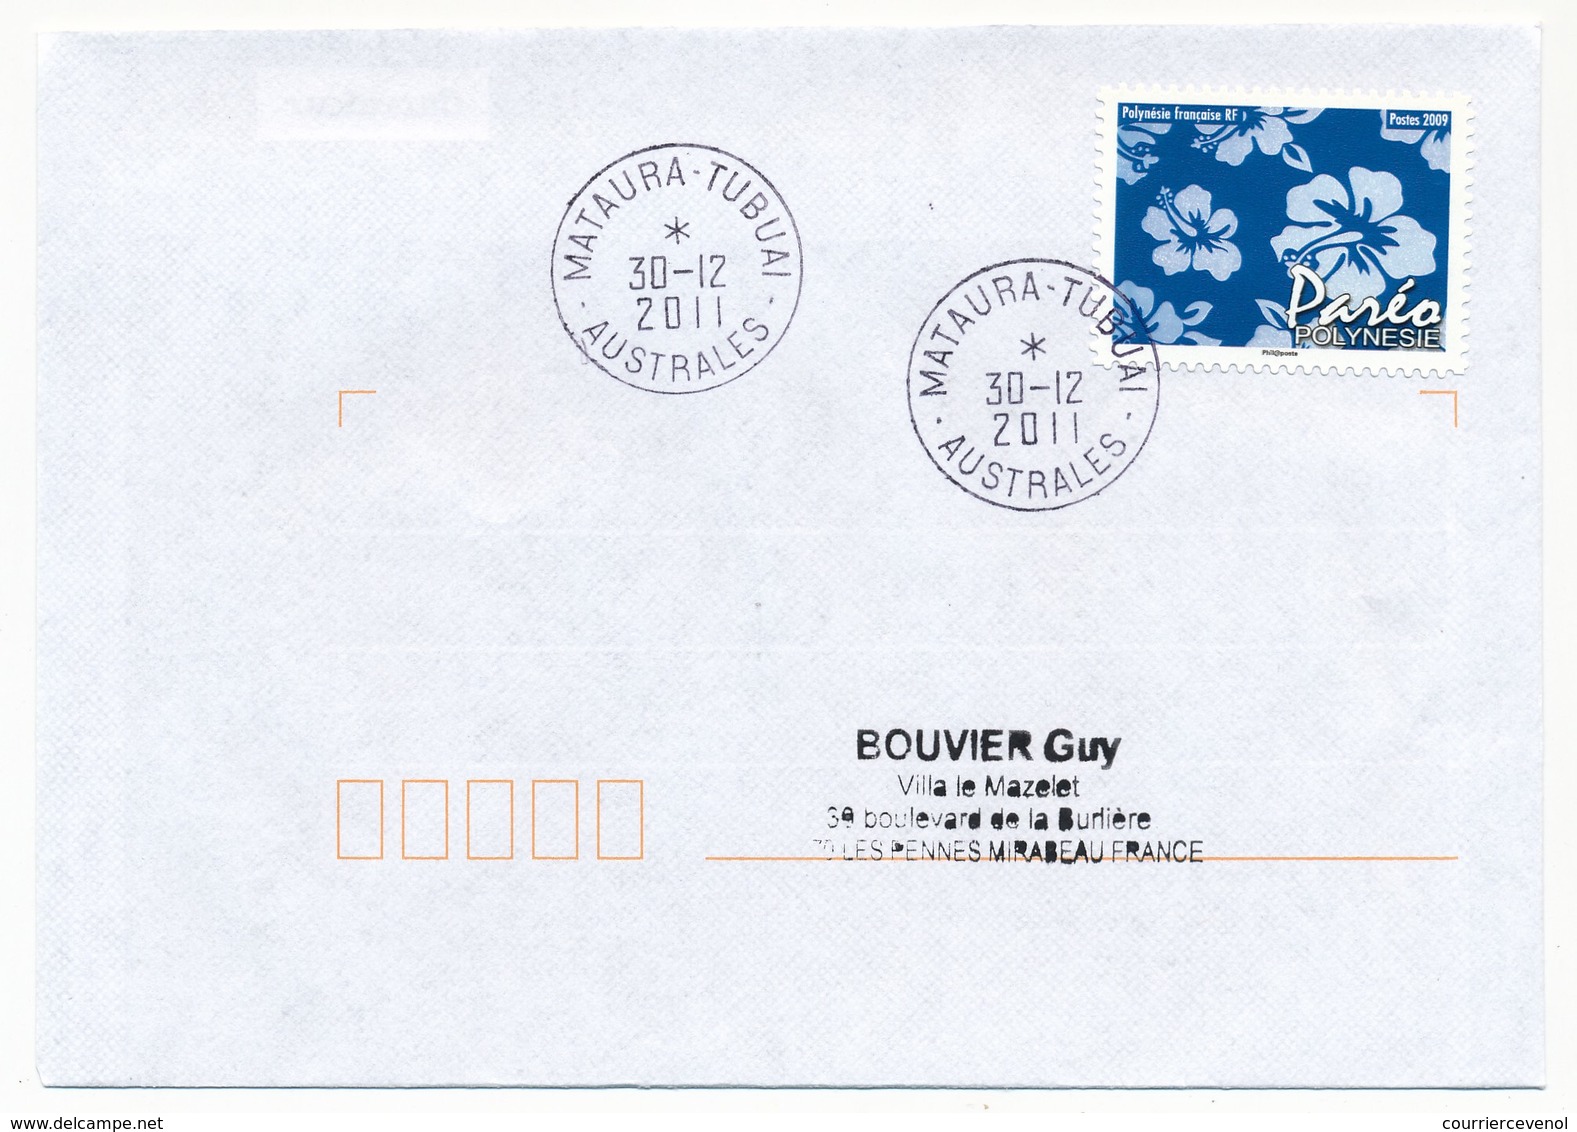 POLYNESIE FRANCAISE - Enveloppe Affr. Pareo Oblitéré "MATAURA-TUBAI  AUSTRALES" 30-12-2011 - Lettres & Documents